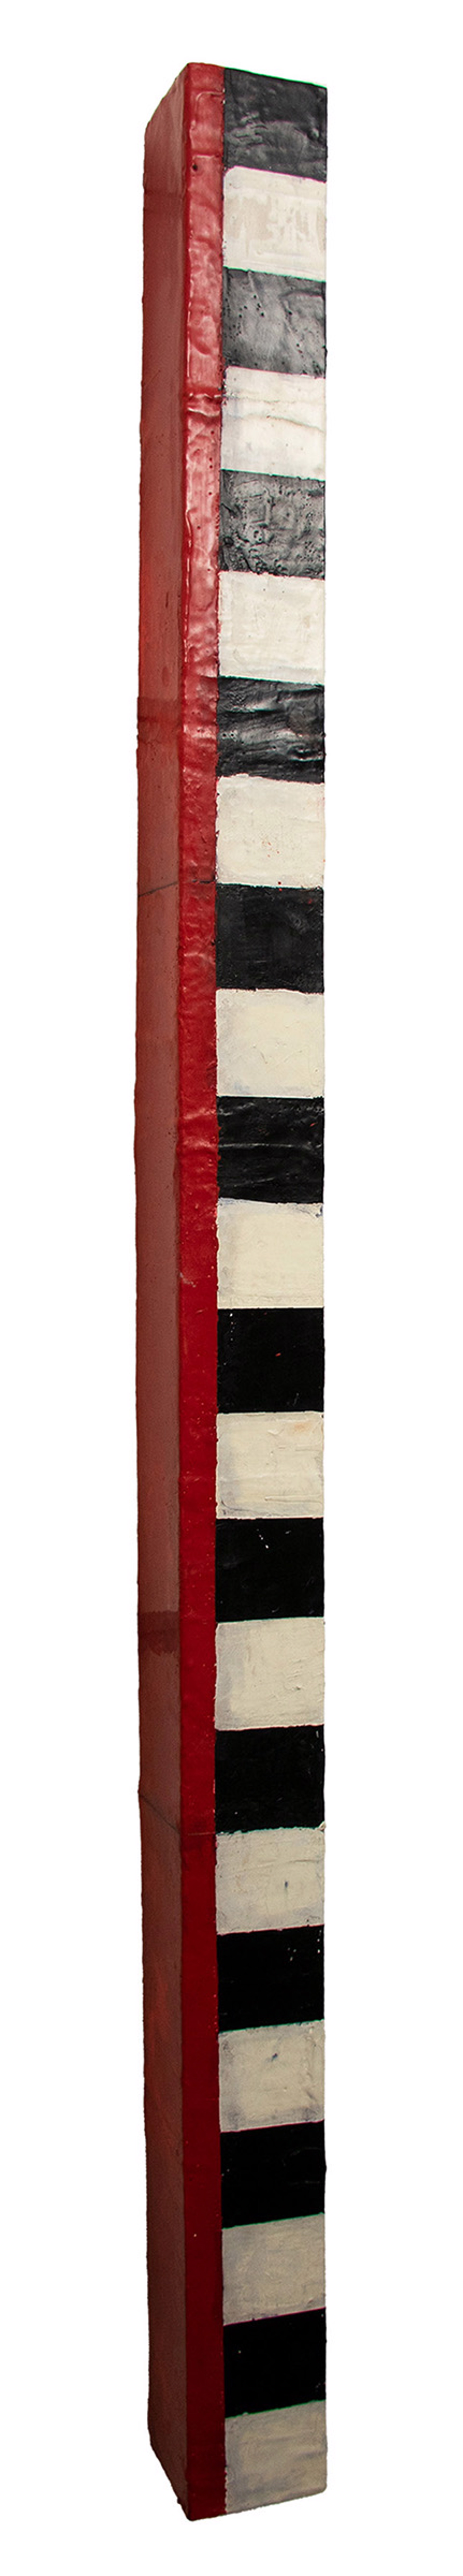 Wall Column, Red, Black + White by Graceann Warn